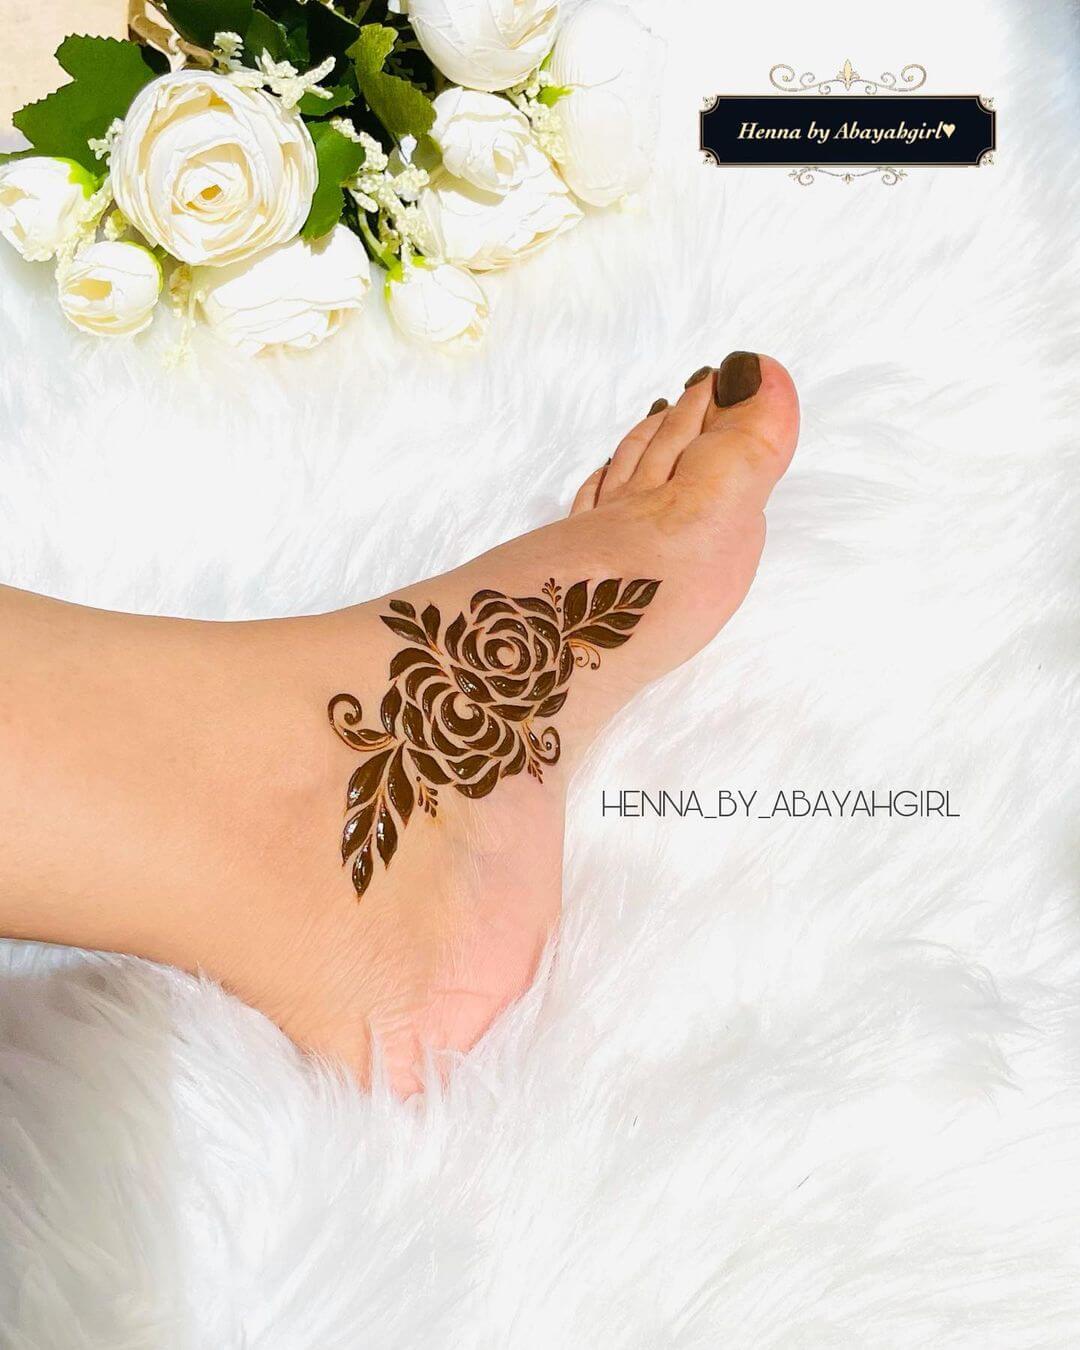 5102 Henna Leg Tattoo Images Stock Photos  Vectors  Shutterstock